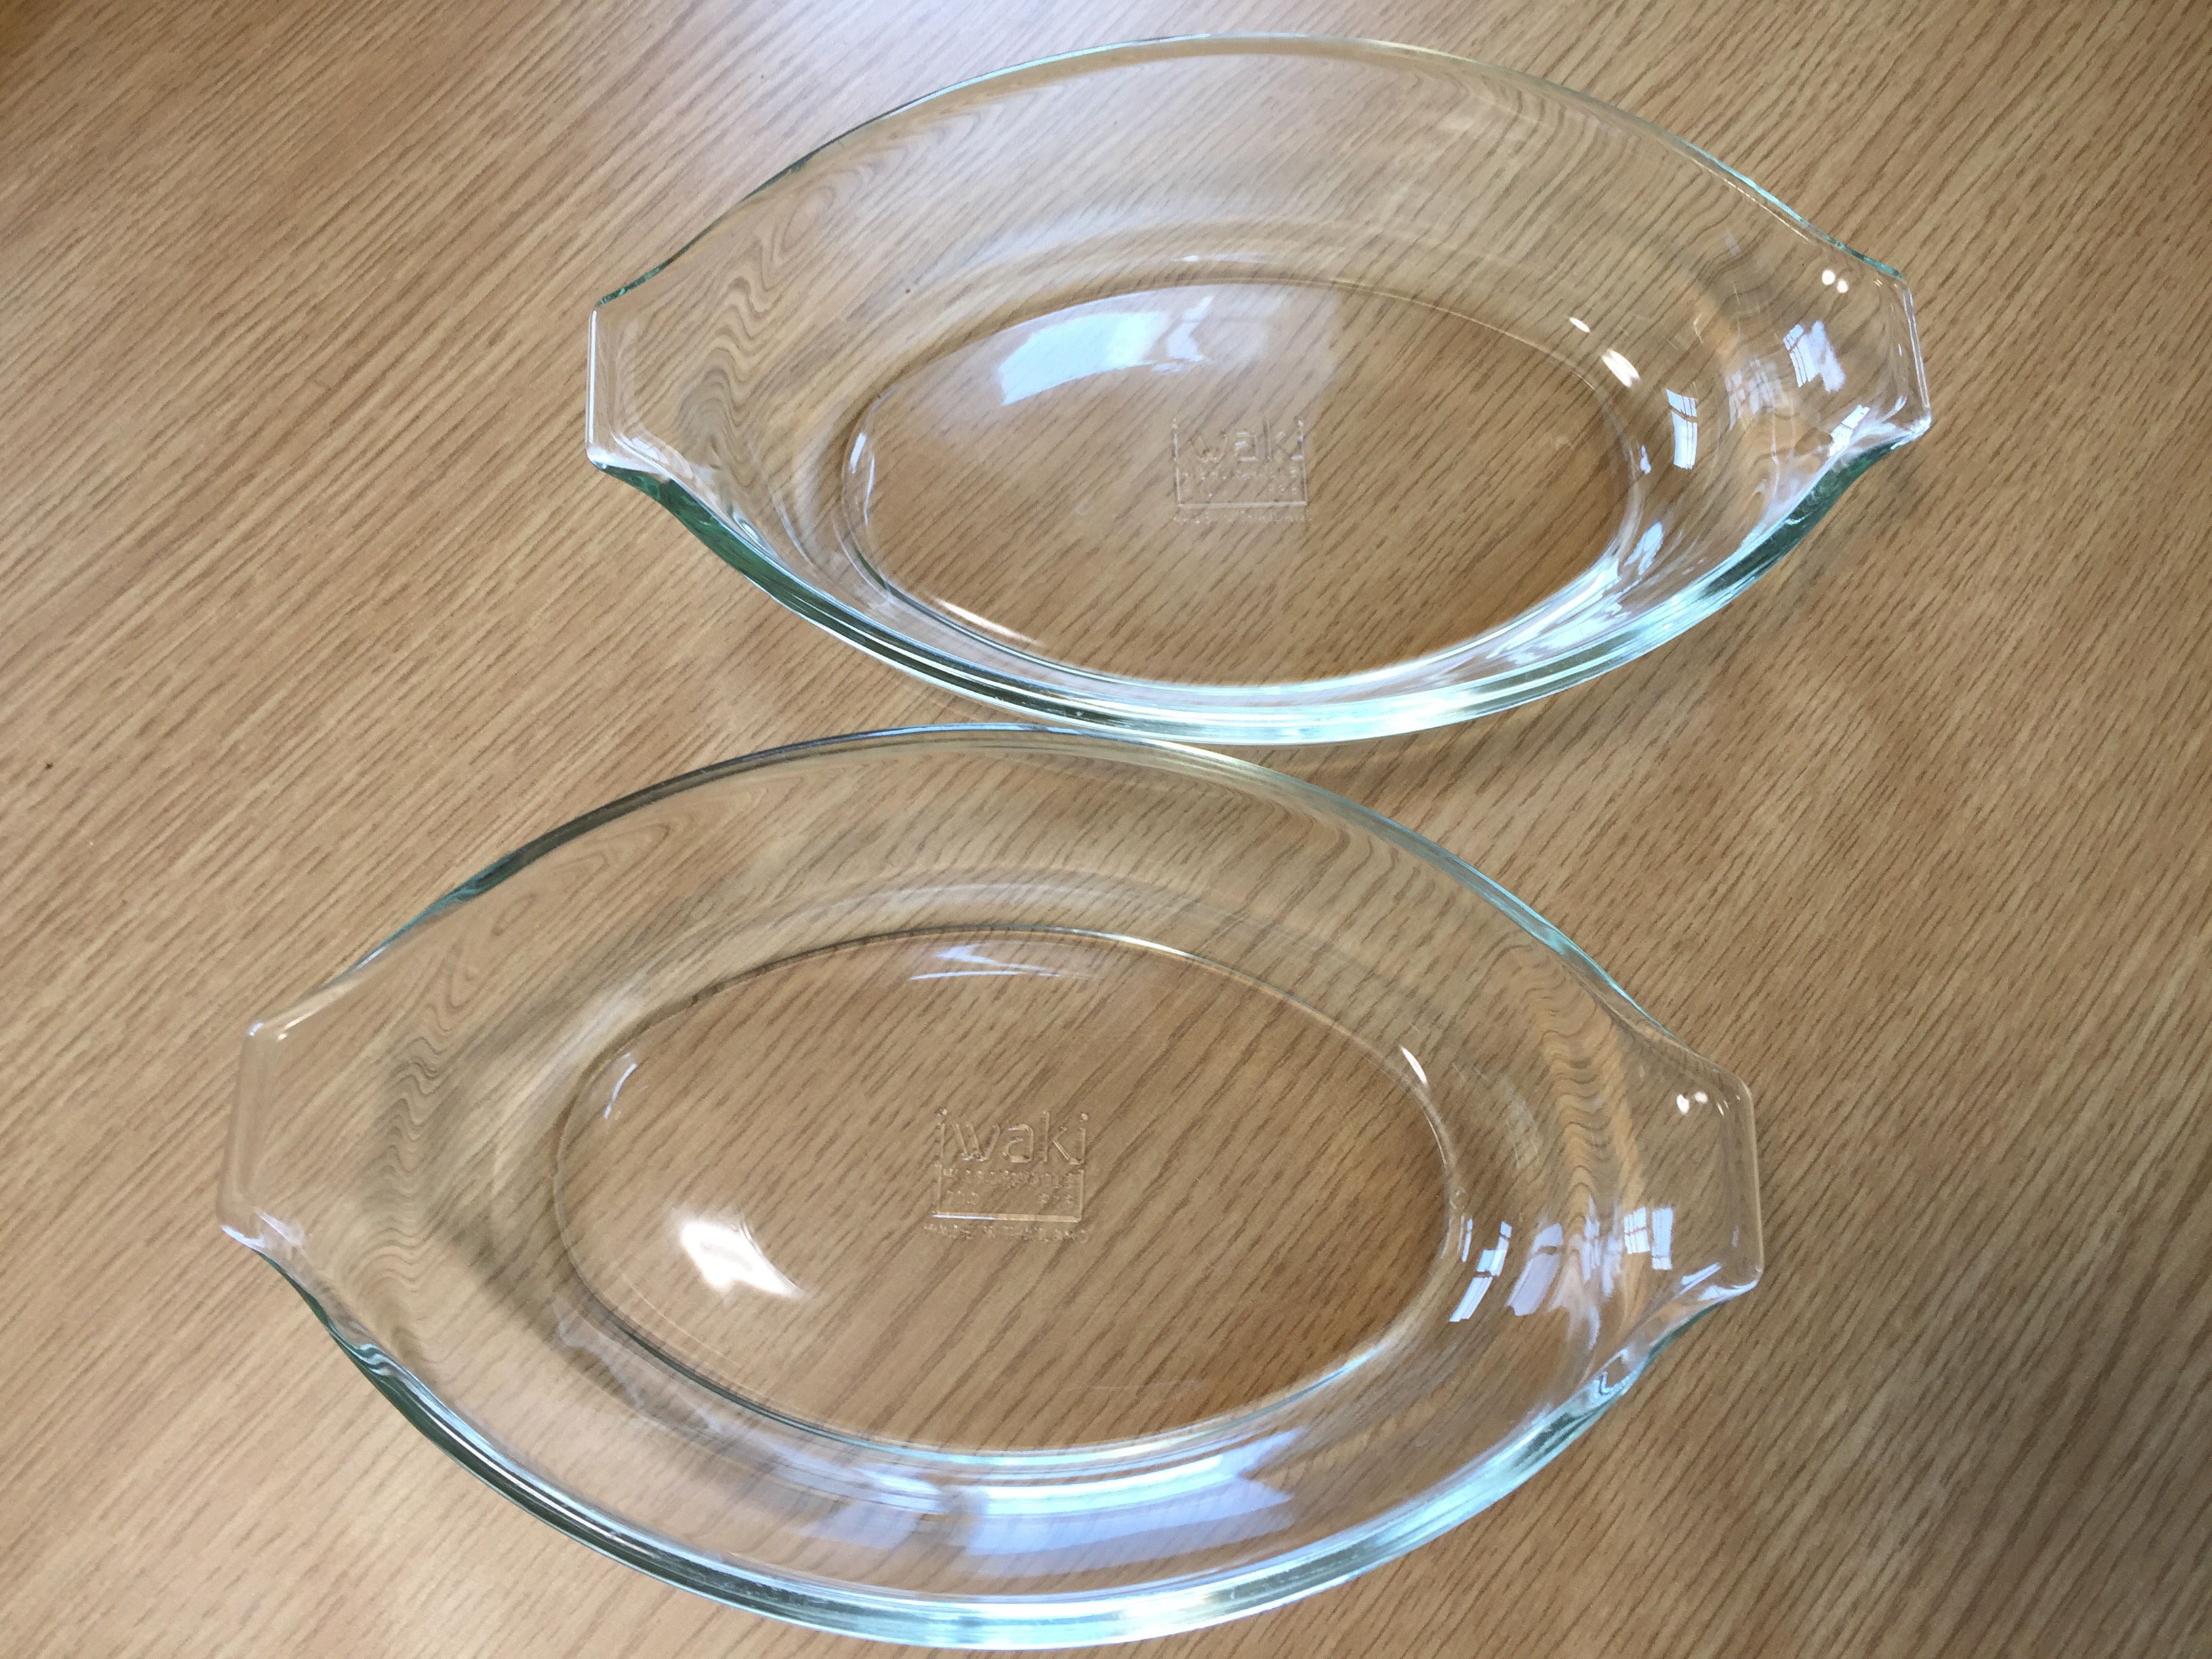 iwaki 耐熱ガラス グラタン皿